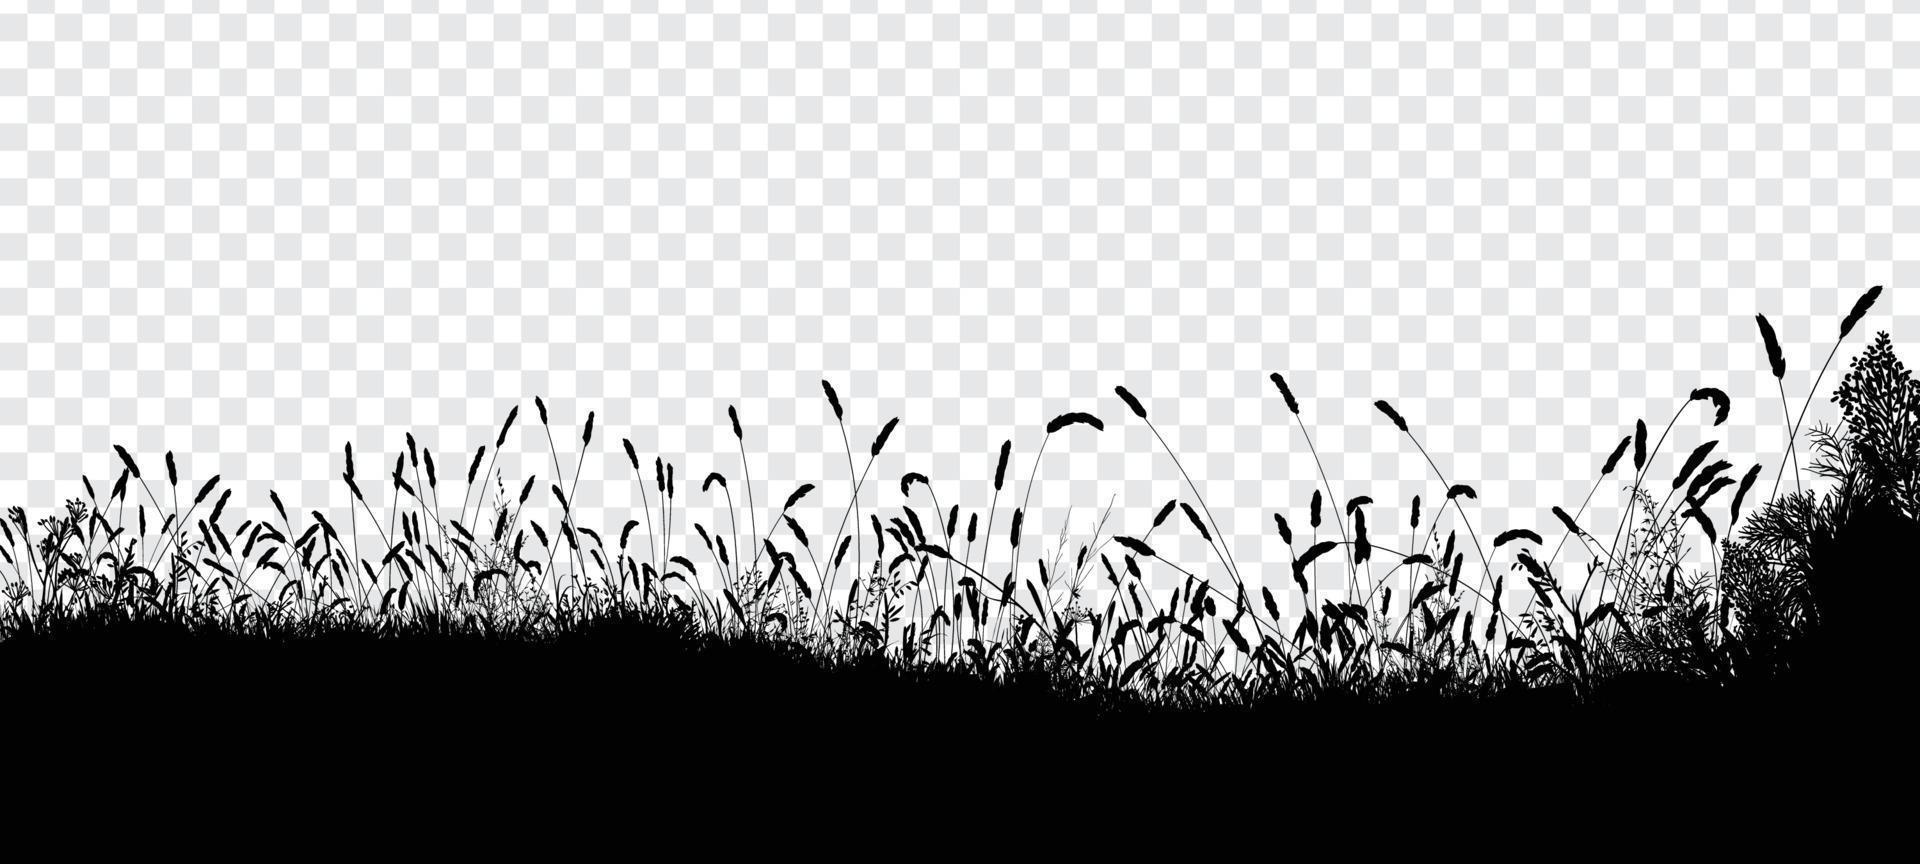 gras in de weide silhouet achtergrond vector